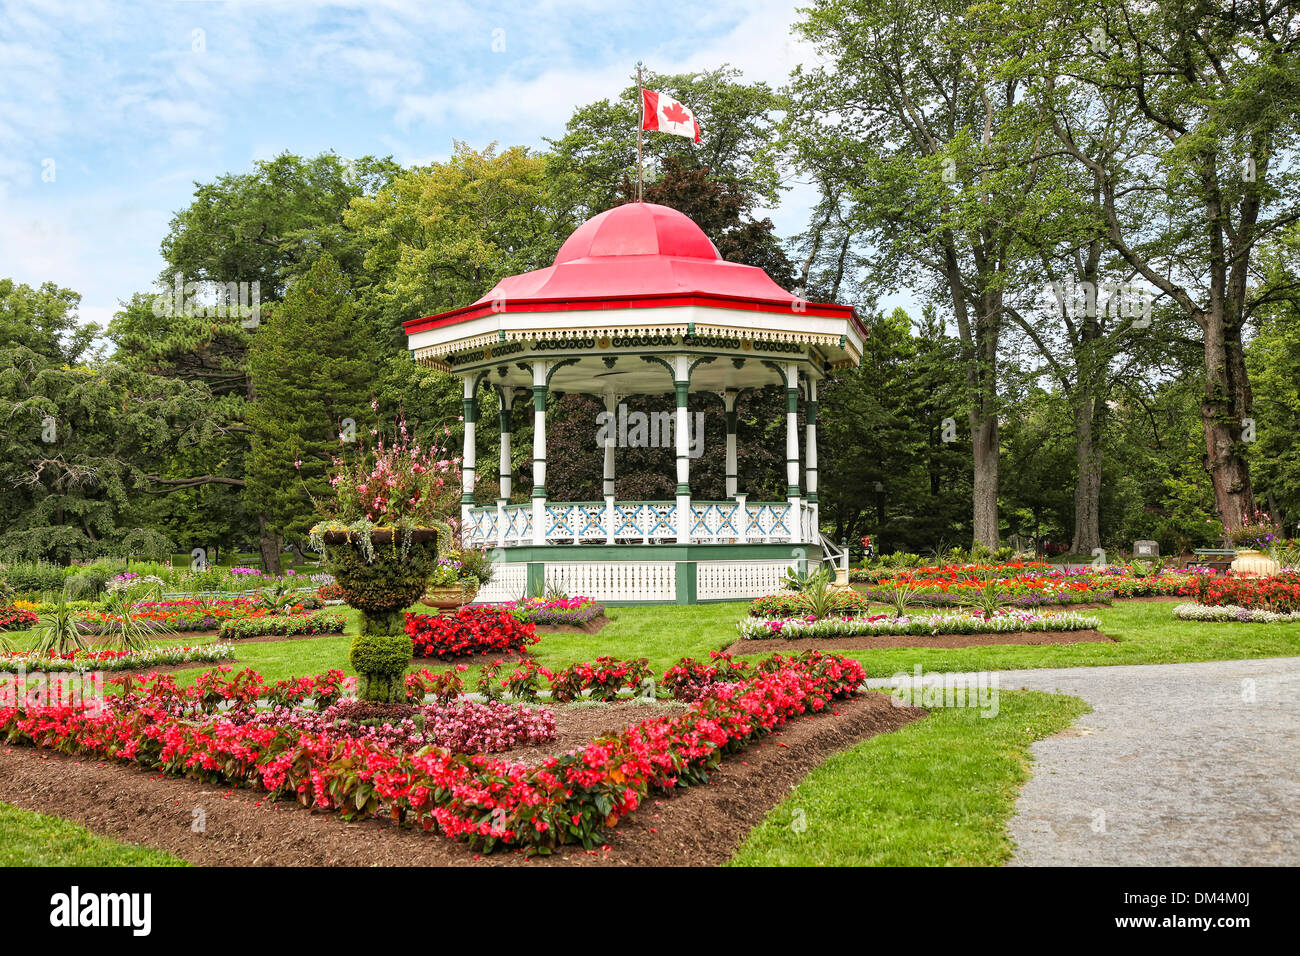 The bandstand or gazebo in the Halifax Public Gardens in Halifax, Nova Scotia. Stock Photo